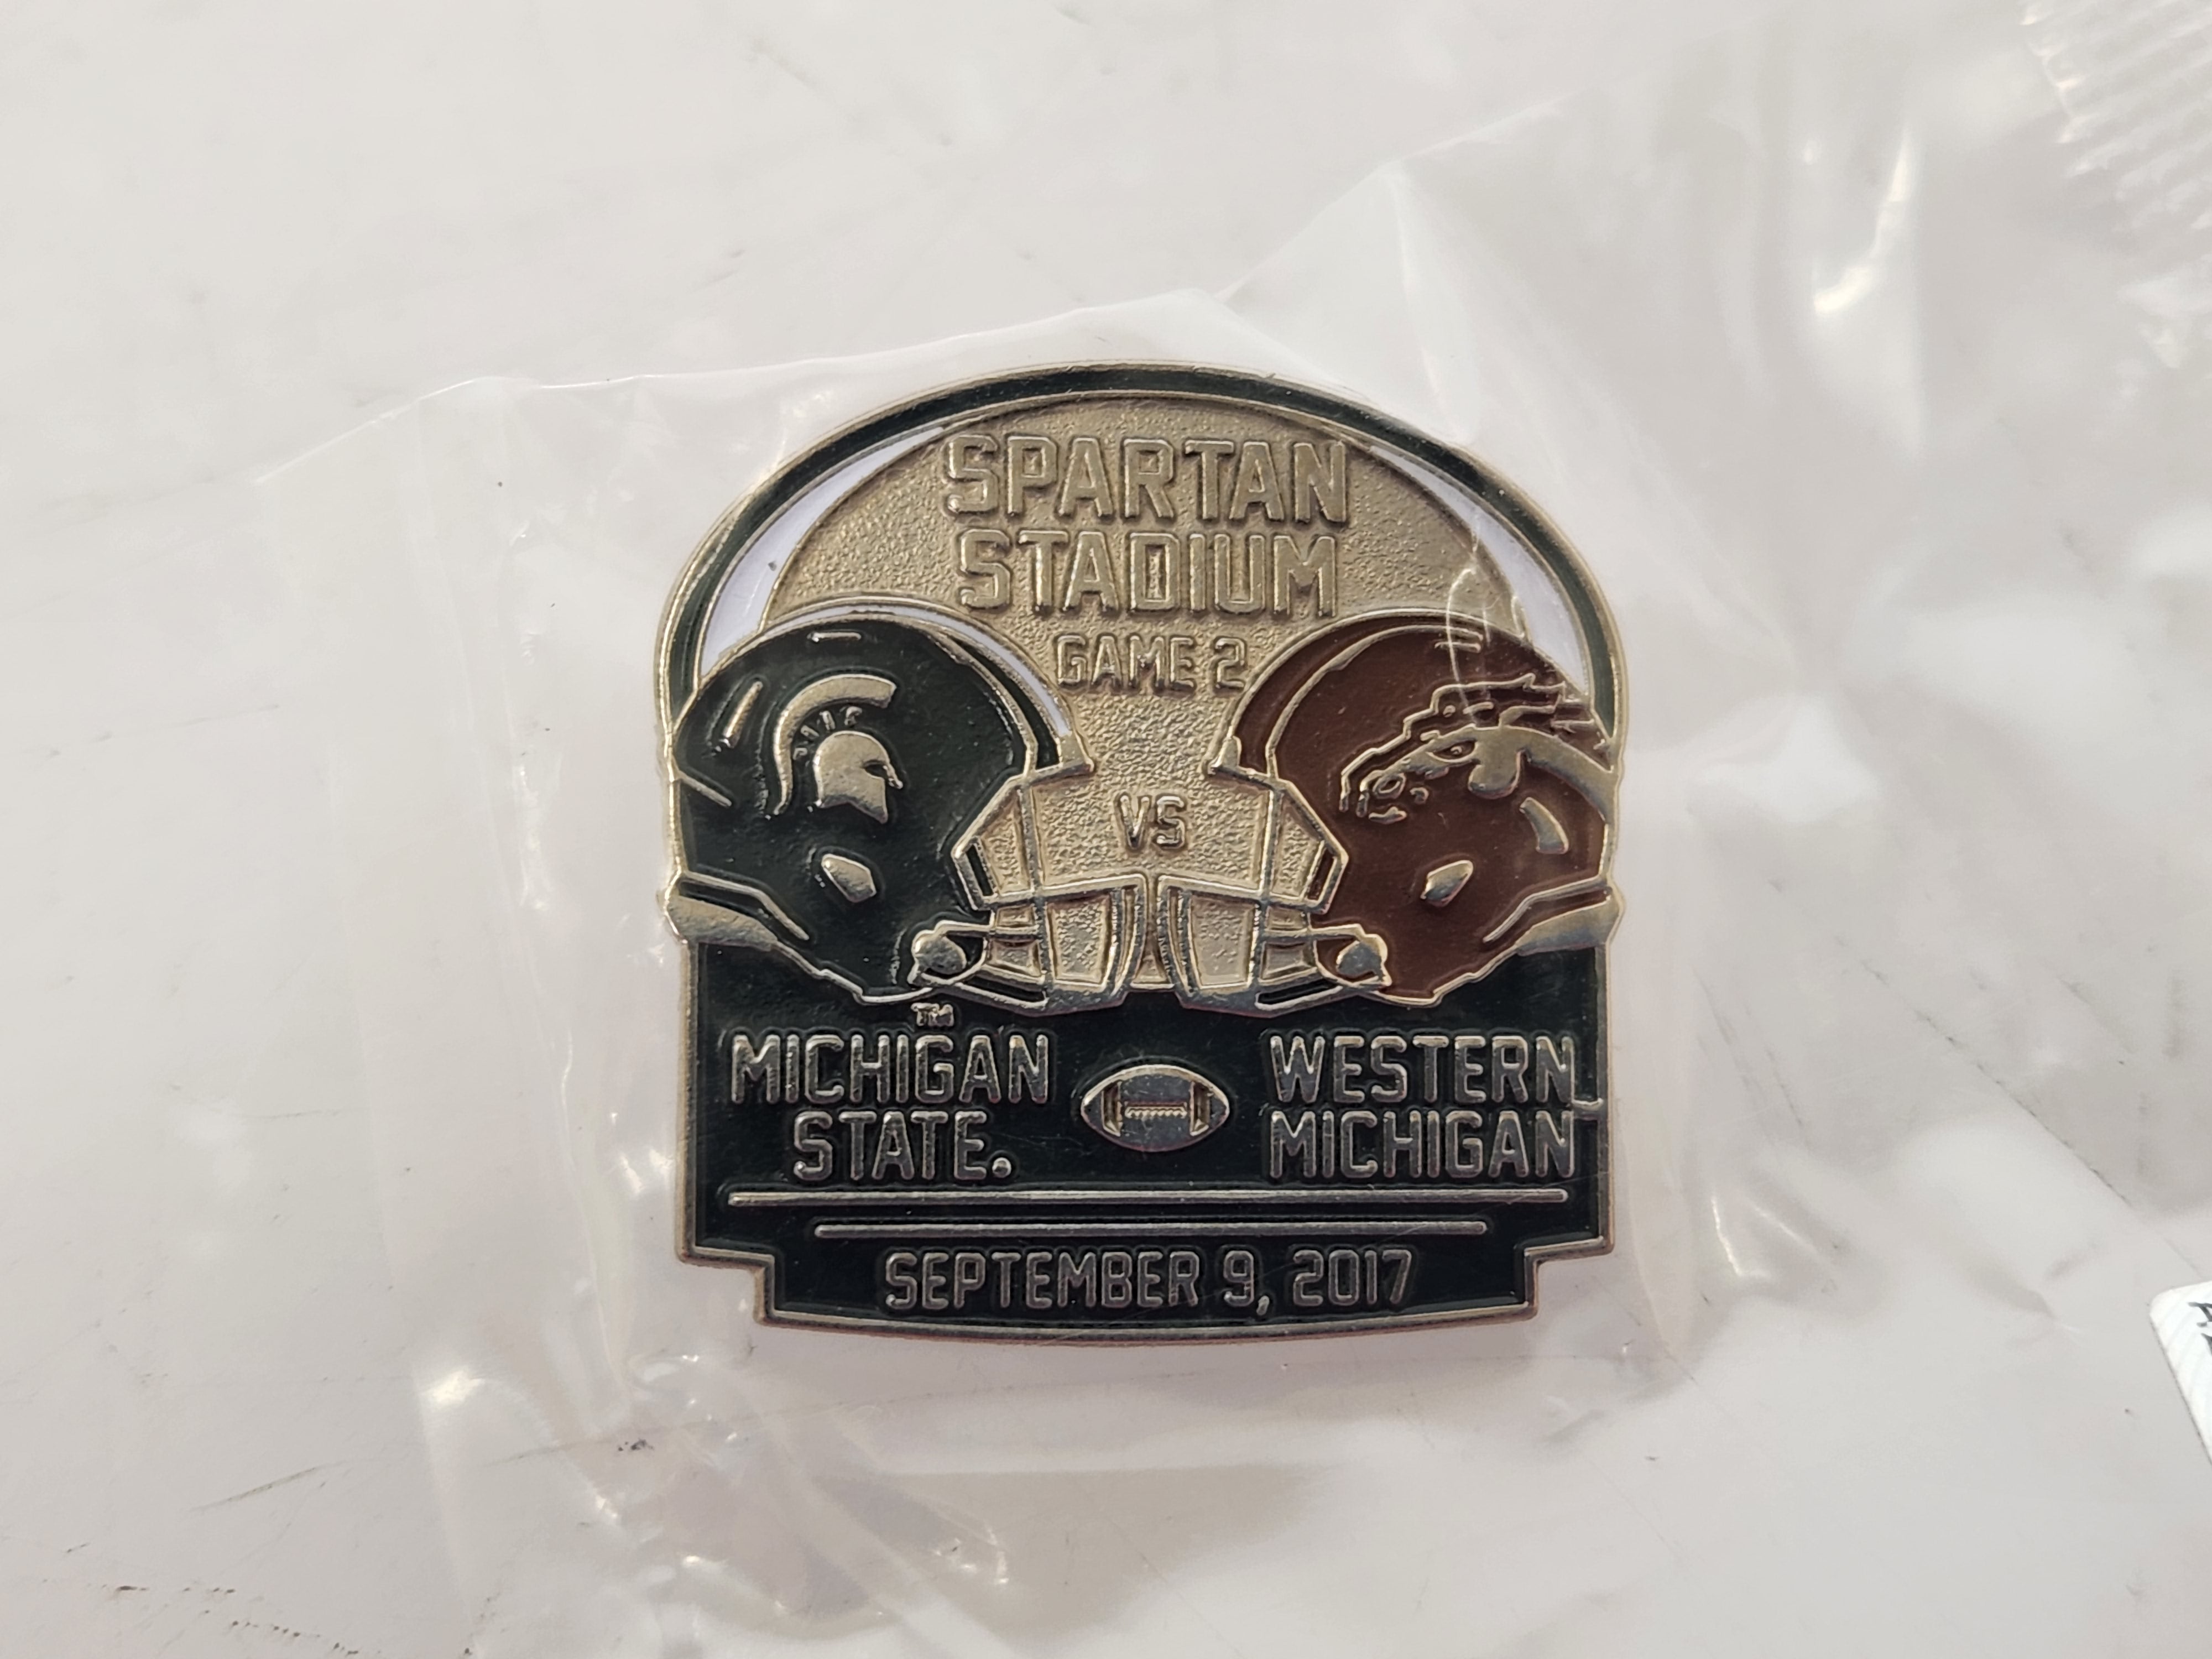 2017 Michigan State vs. Western Michigan Gameday Pin